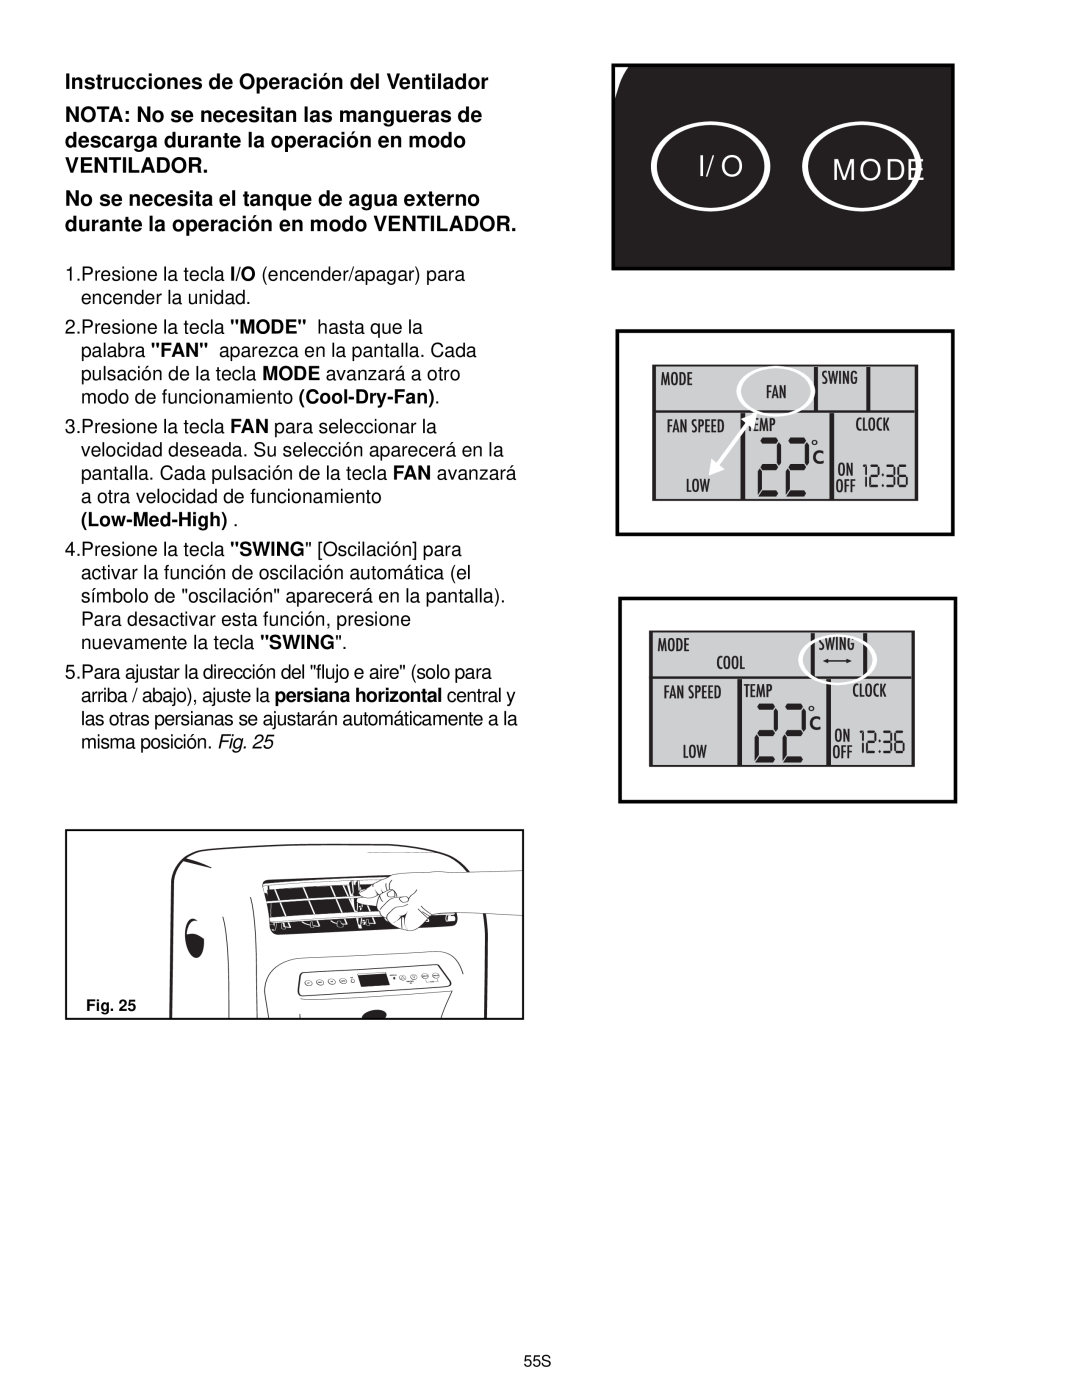 Danby DPAC9030, DCAP 12030 manual I/O Mode, Instrucciones de Operación del Ventilador 